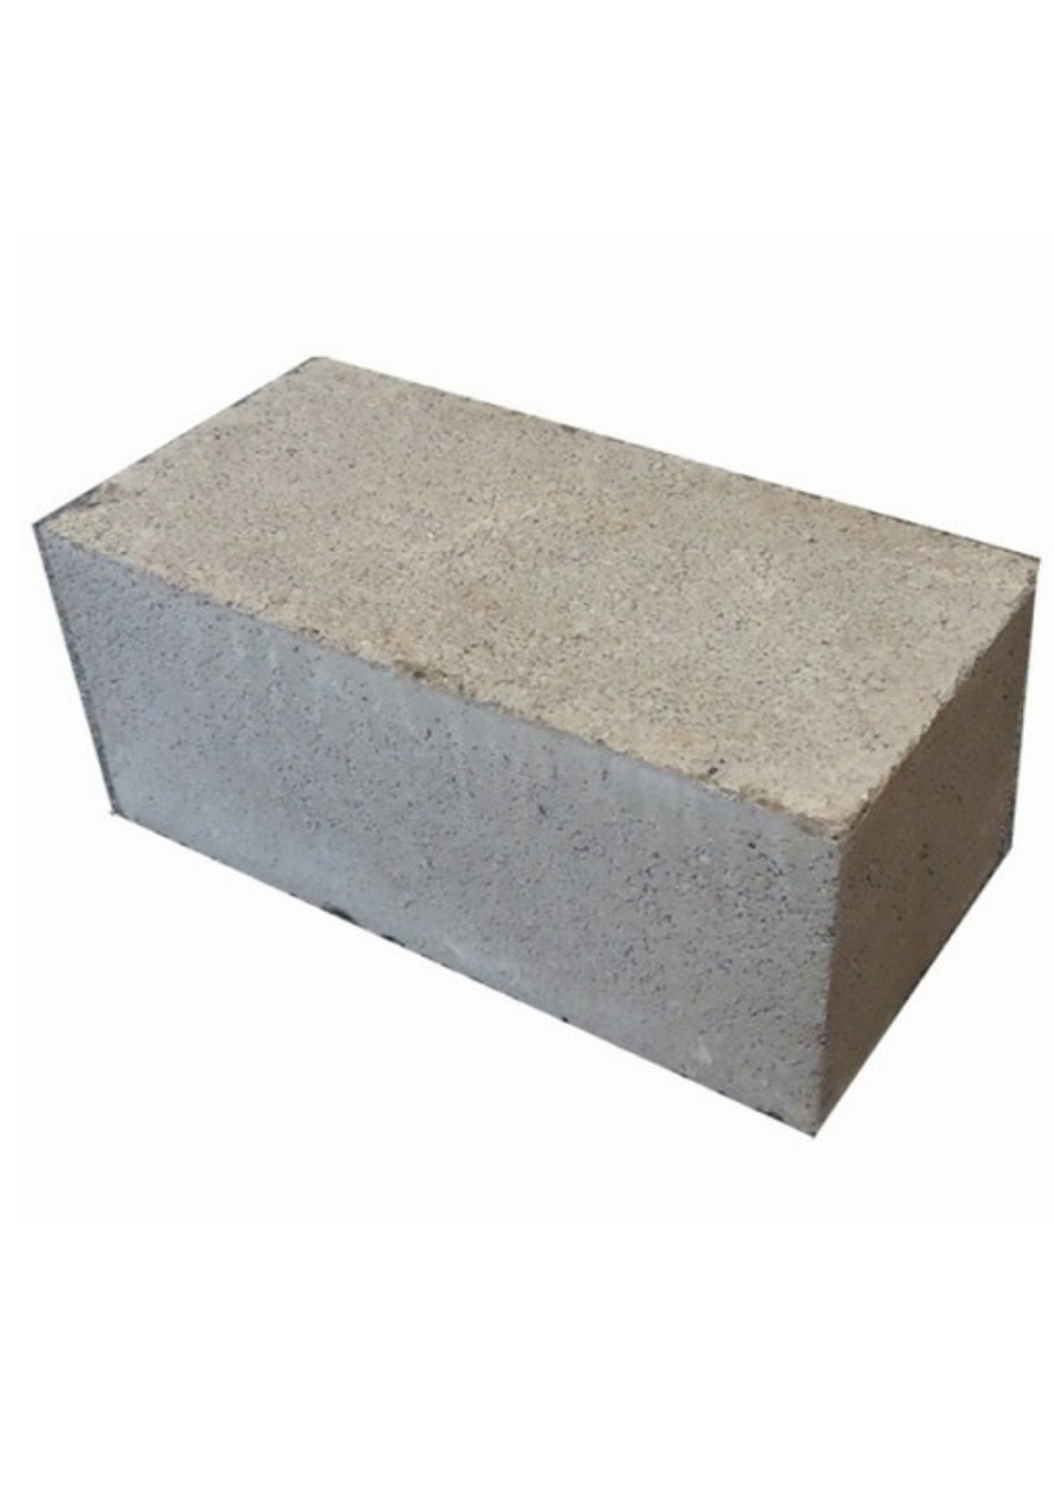 Блок бетонный 20 20 40. Блок ФБС 20 20 40. Блок фундаментный бетонный ФБС 390x190x188 мм. Блоки фундаметная 20*40. Фундаментный блок 200х200х200 бетонный.